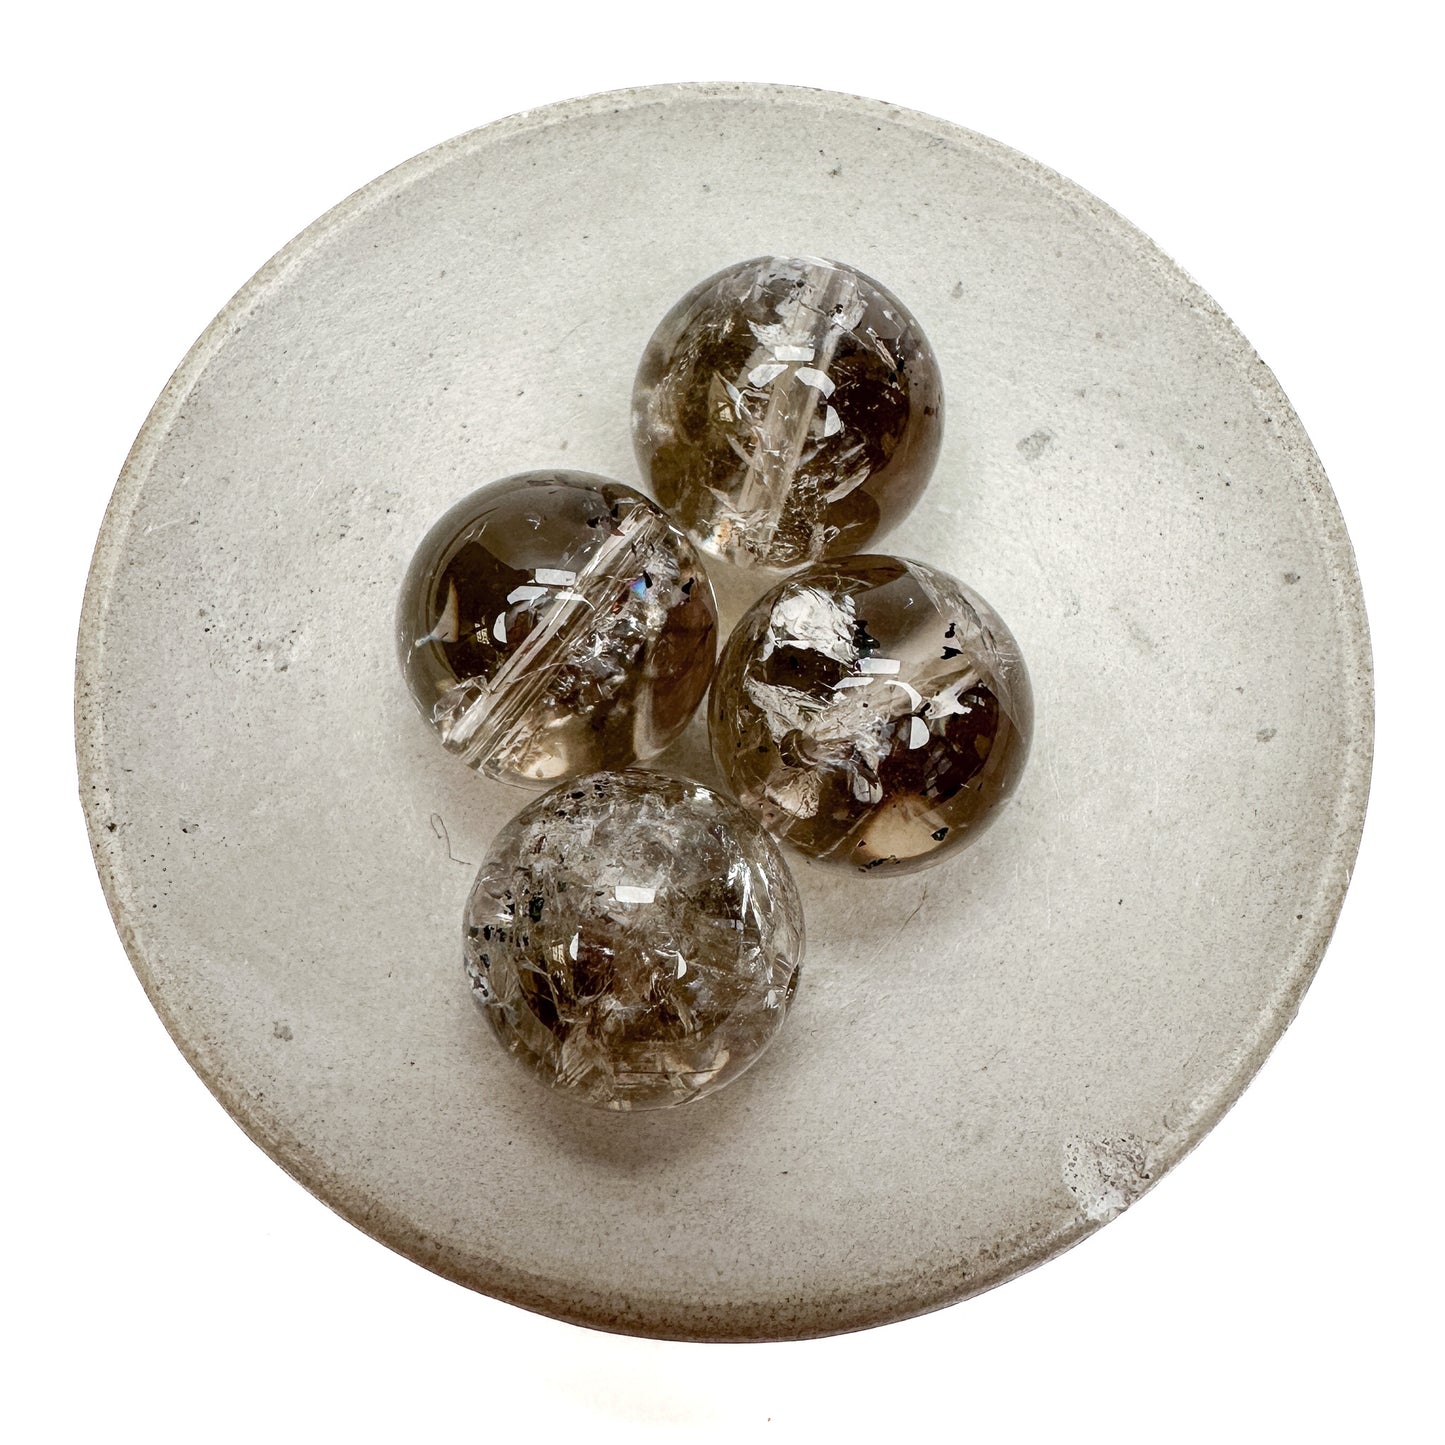 Hematite In Quartz 15.5mm Smooth Round Bead - 1 pc.-The Bead Gallery Honolulu